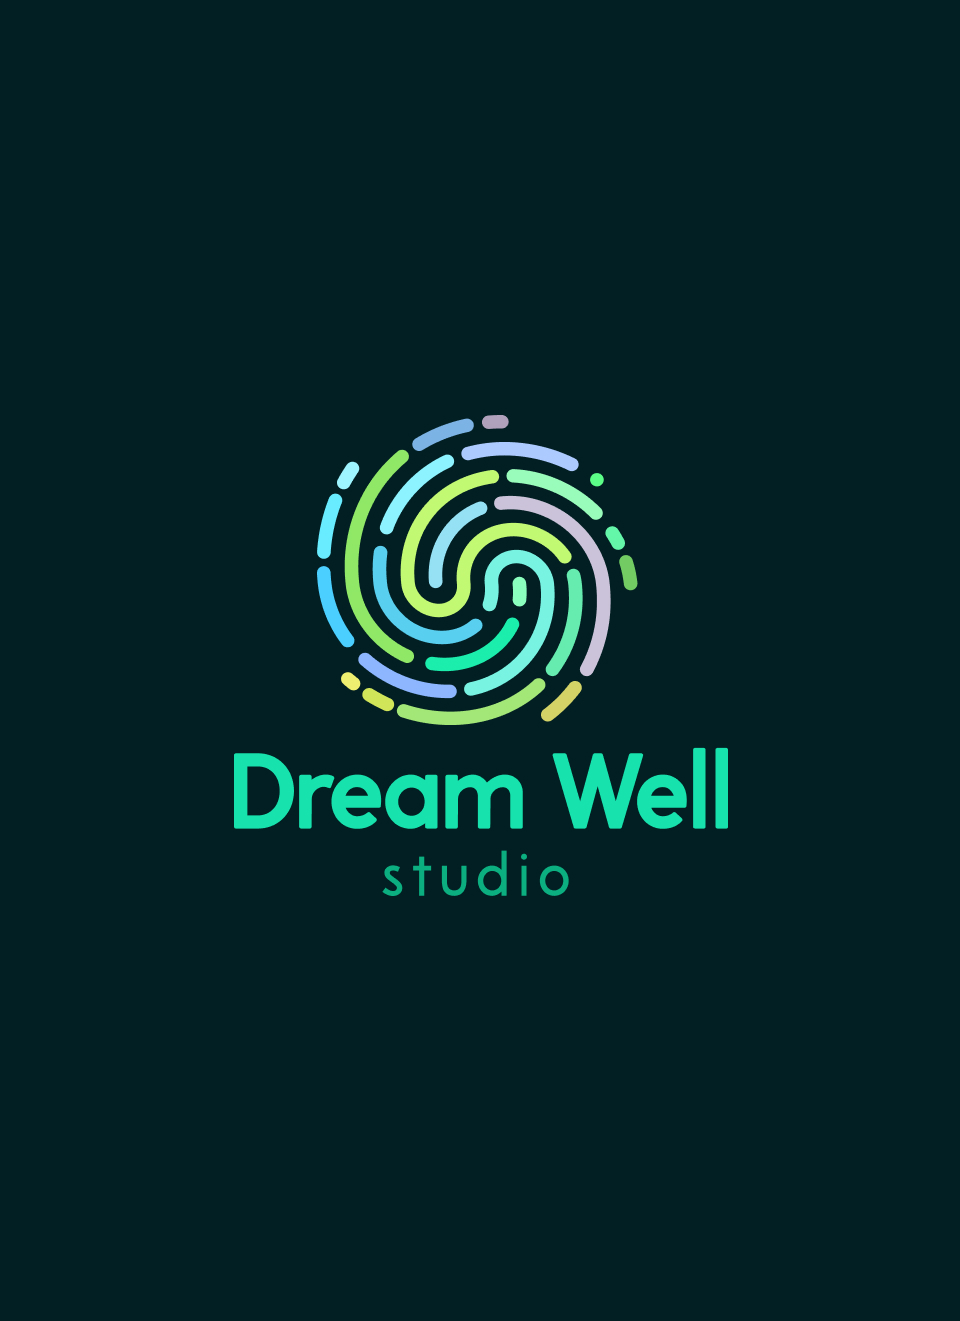 Dreamwell website